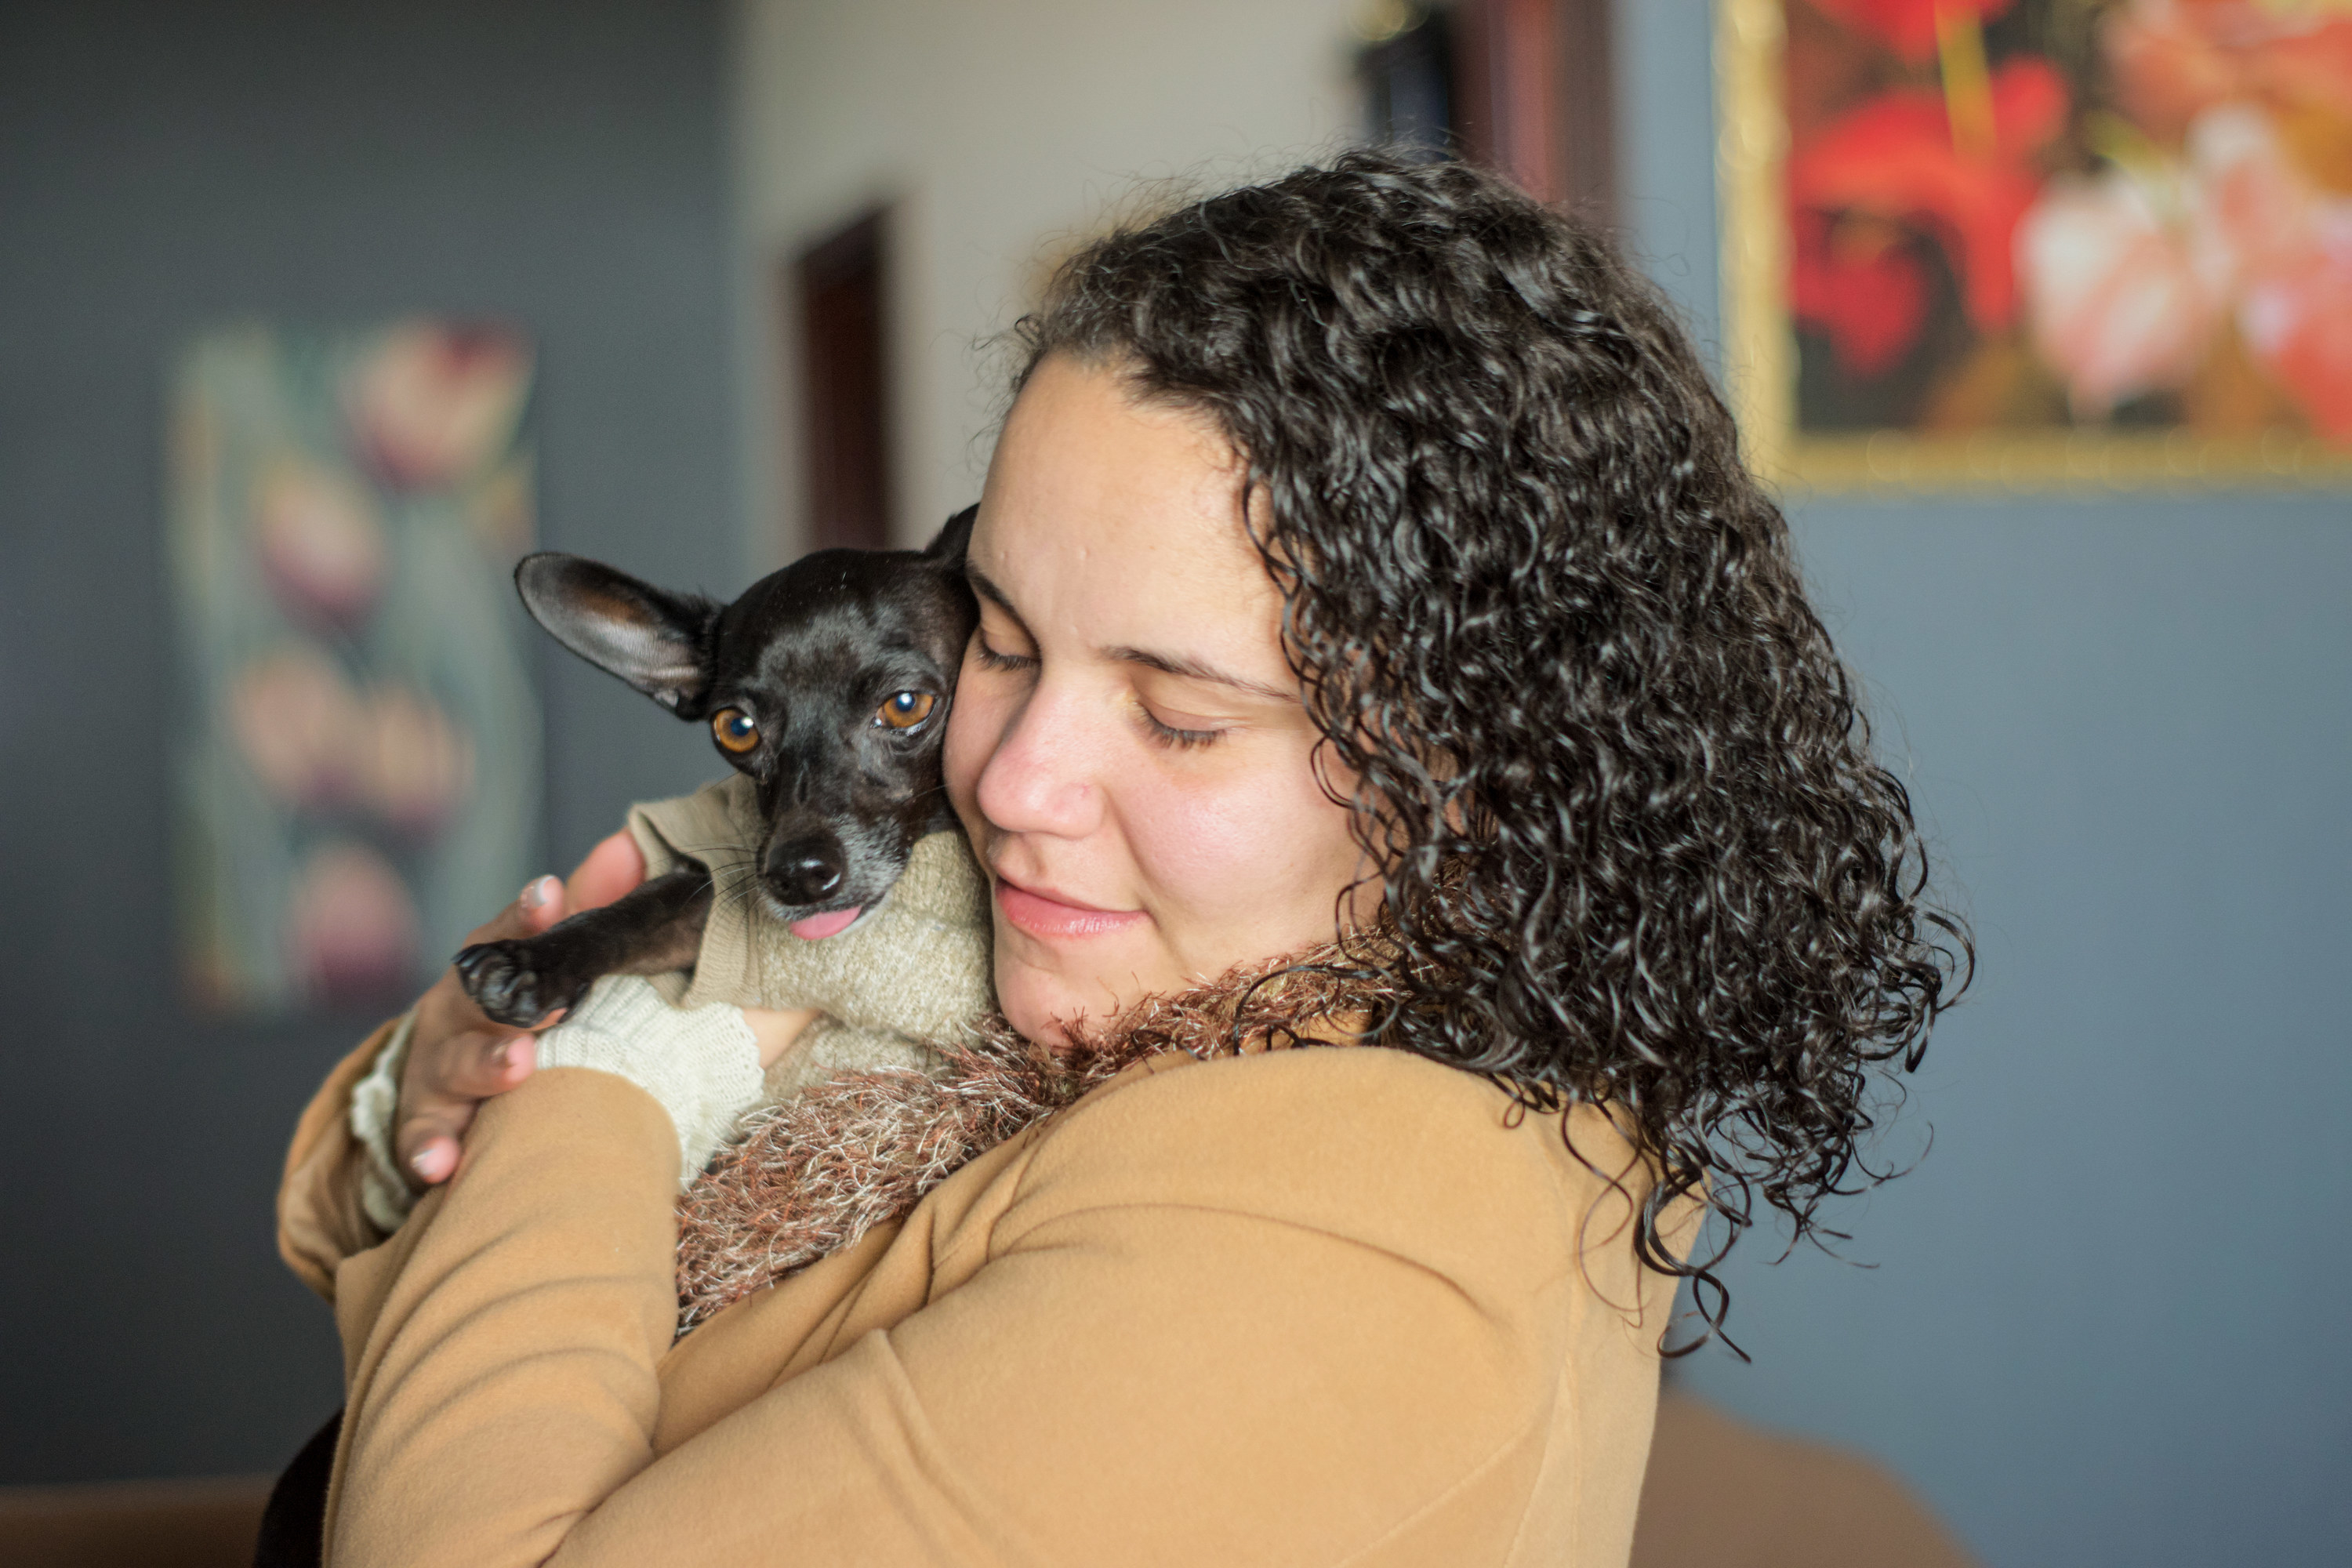 A young woman cuddles with her miniature pinscher dog